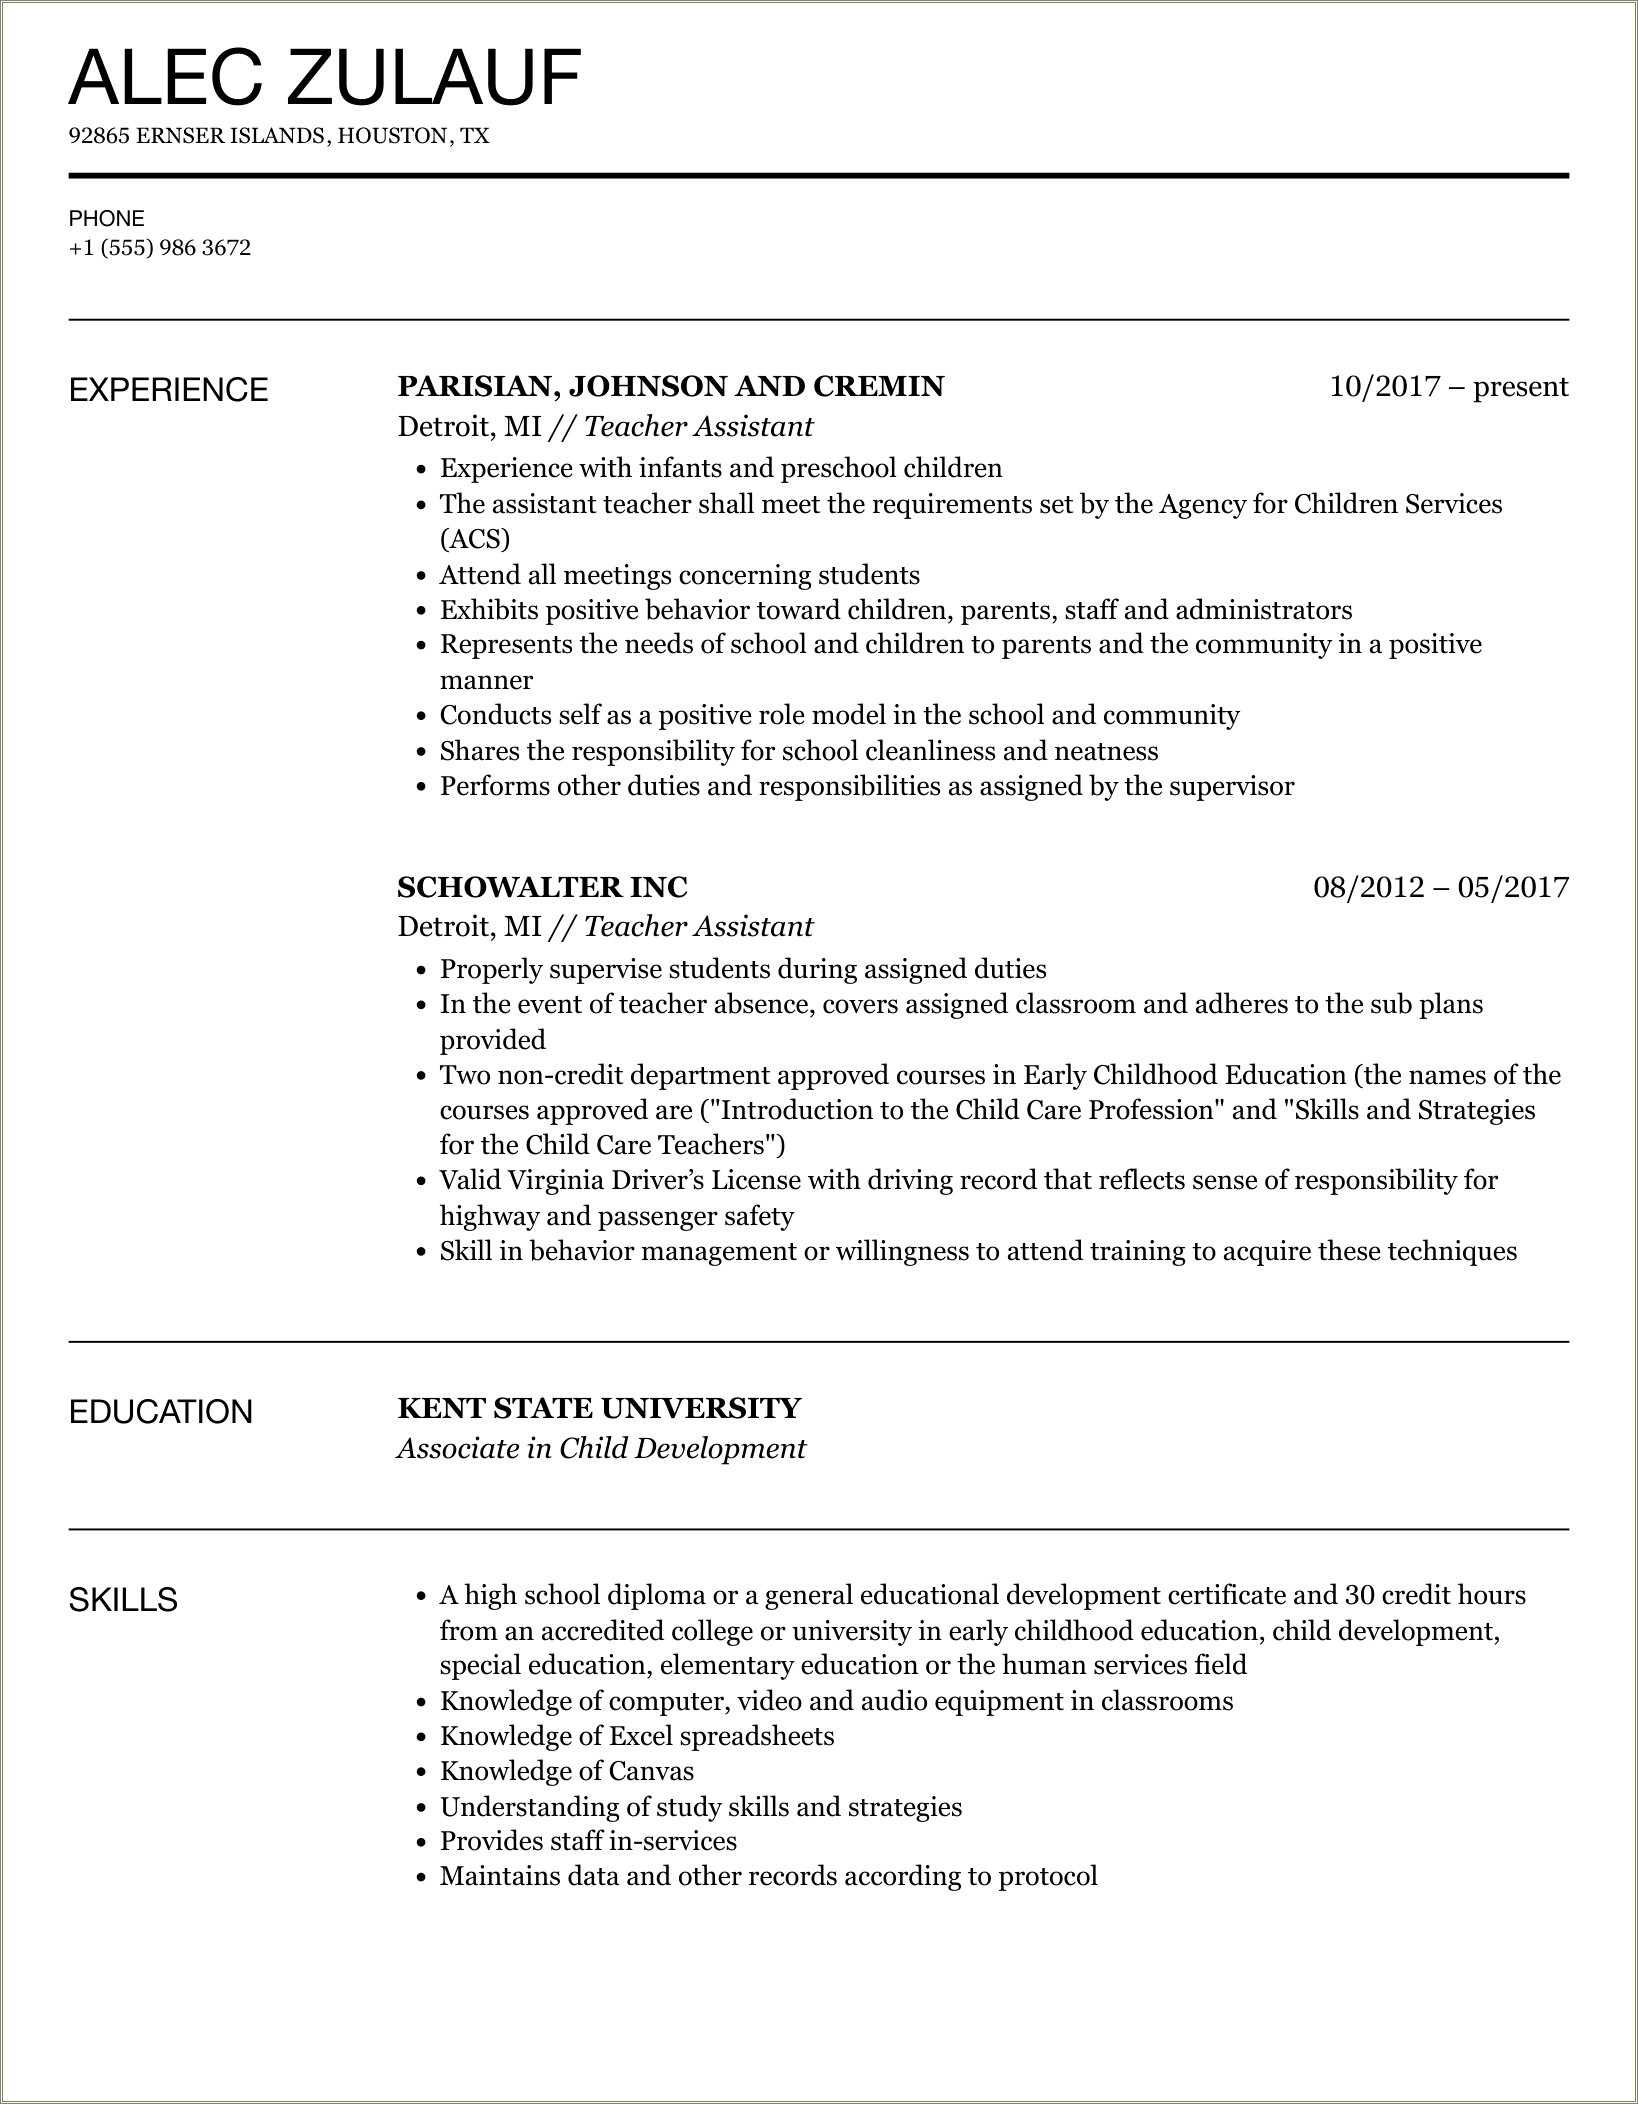 Samples Of Resume For Teacher Assistant